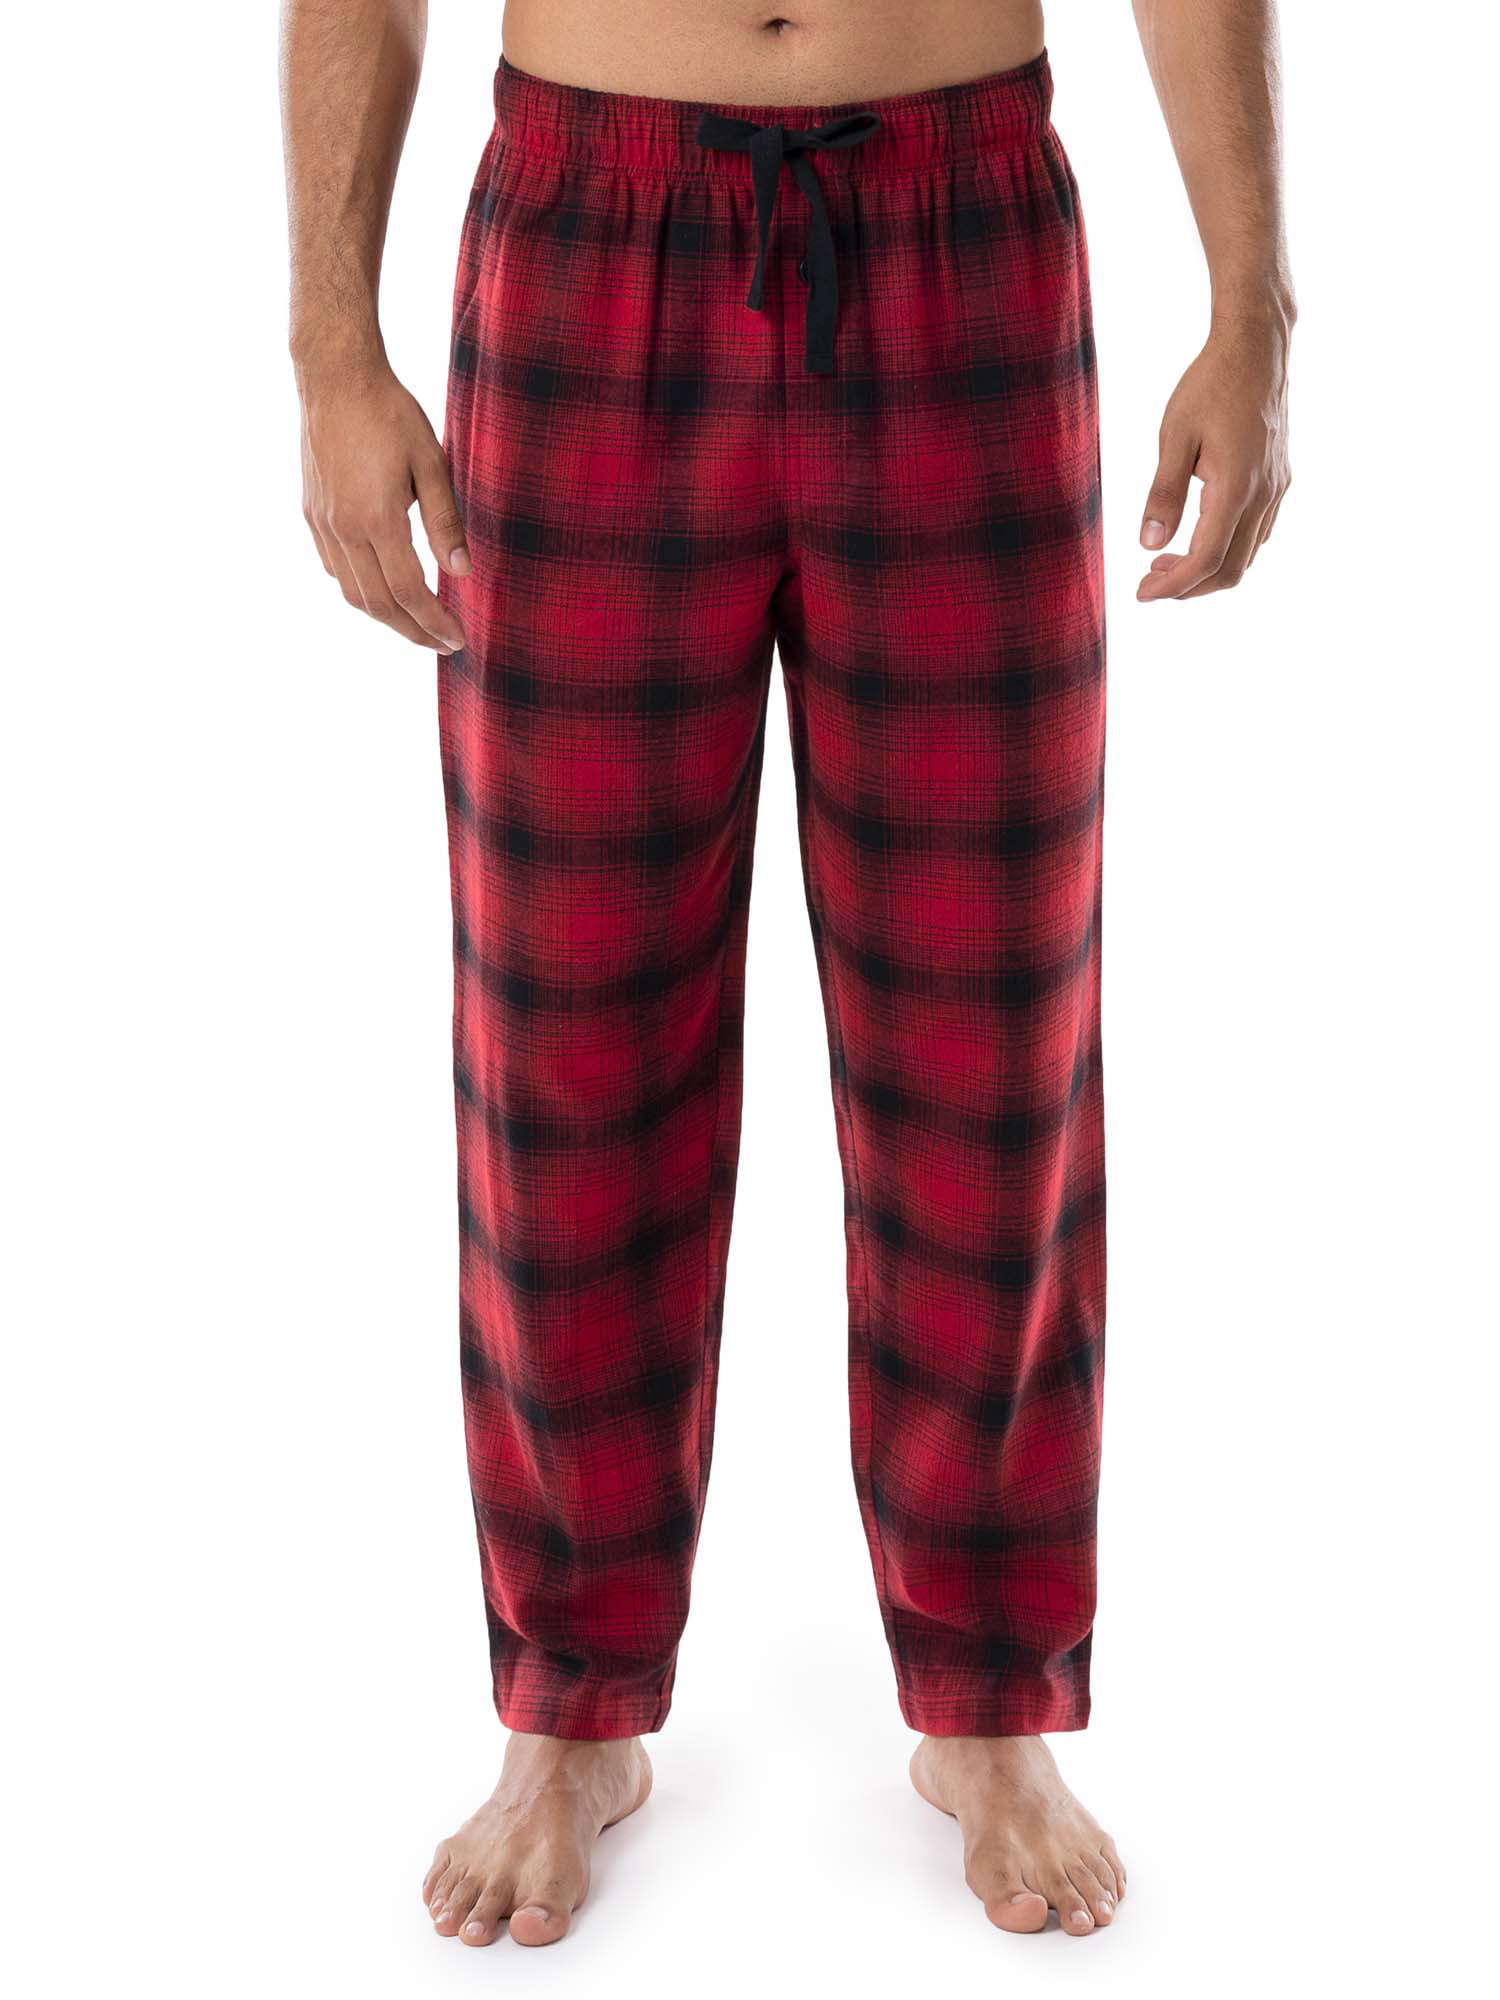 George Men's Plaid Woven Flannel Sleep Pants, size S-5XL